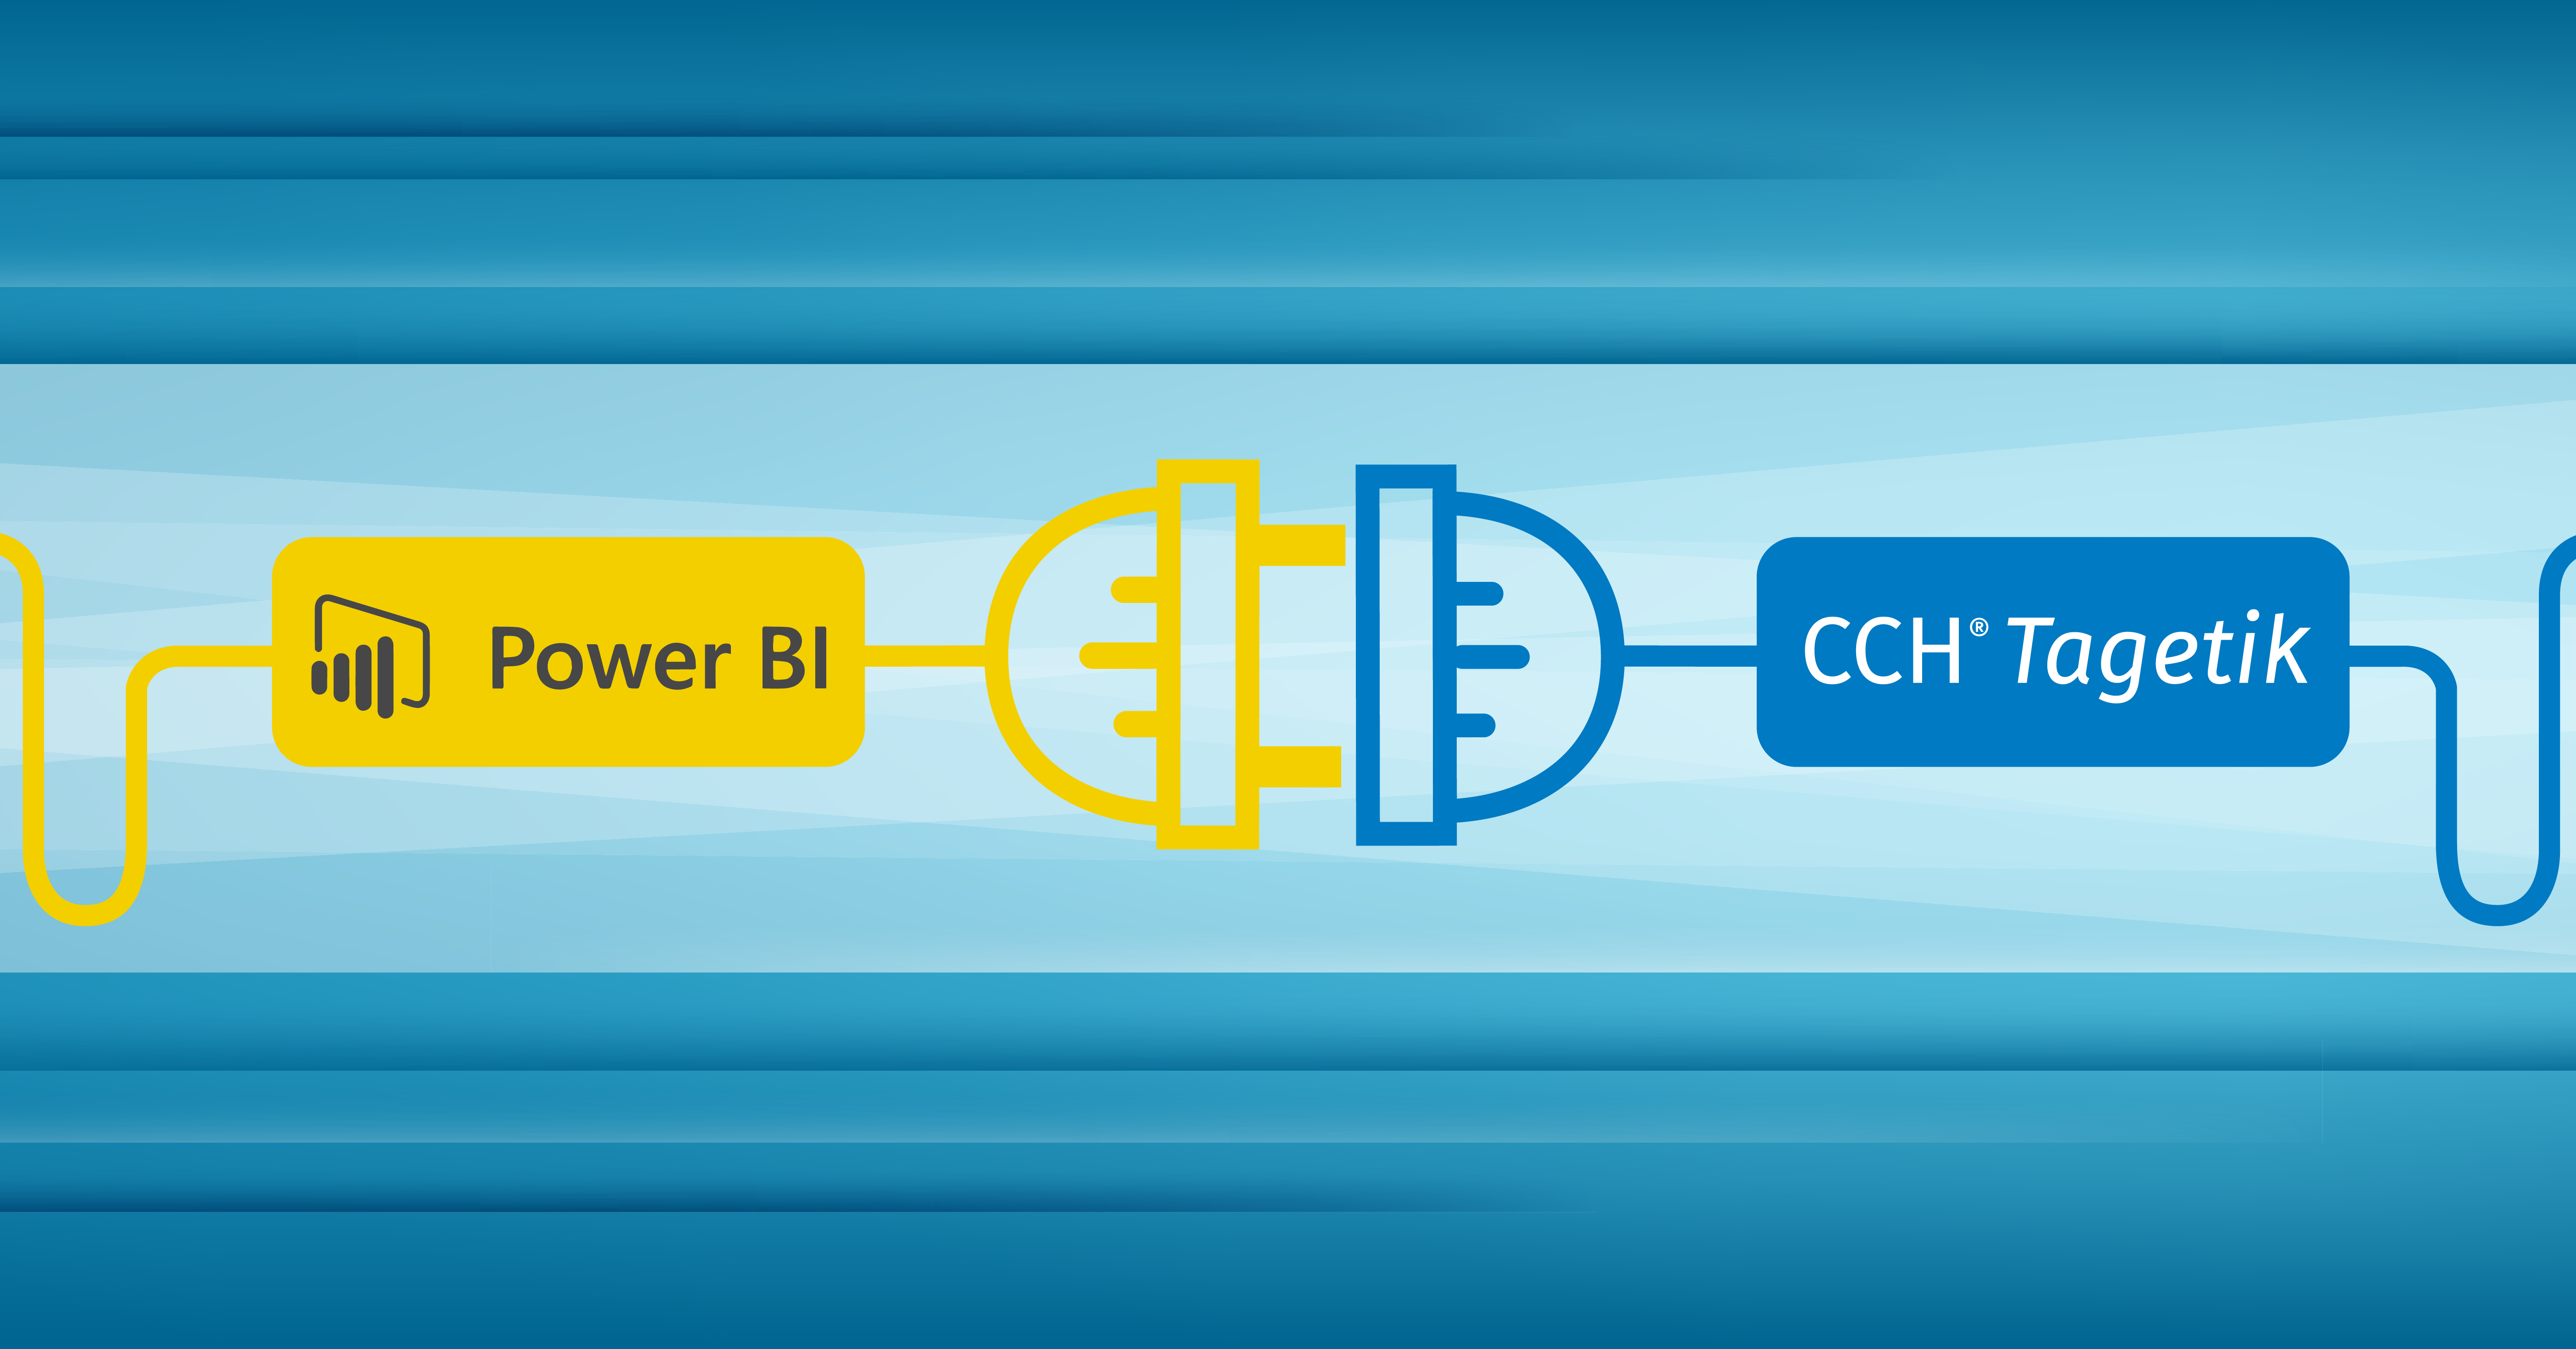 Power BI on CCH® Tagetik